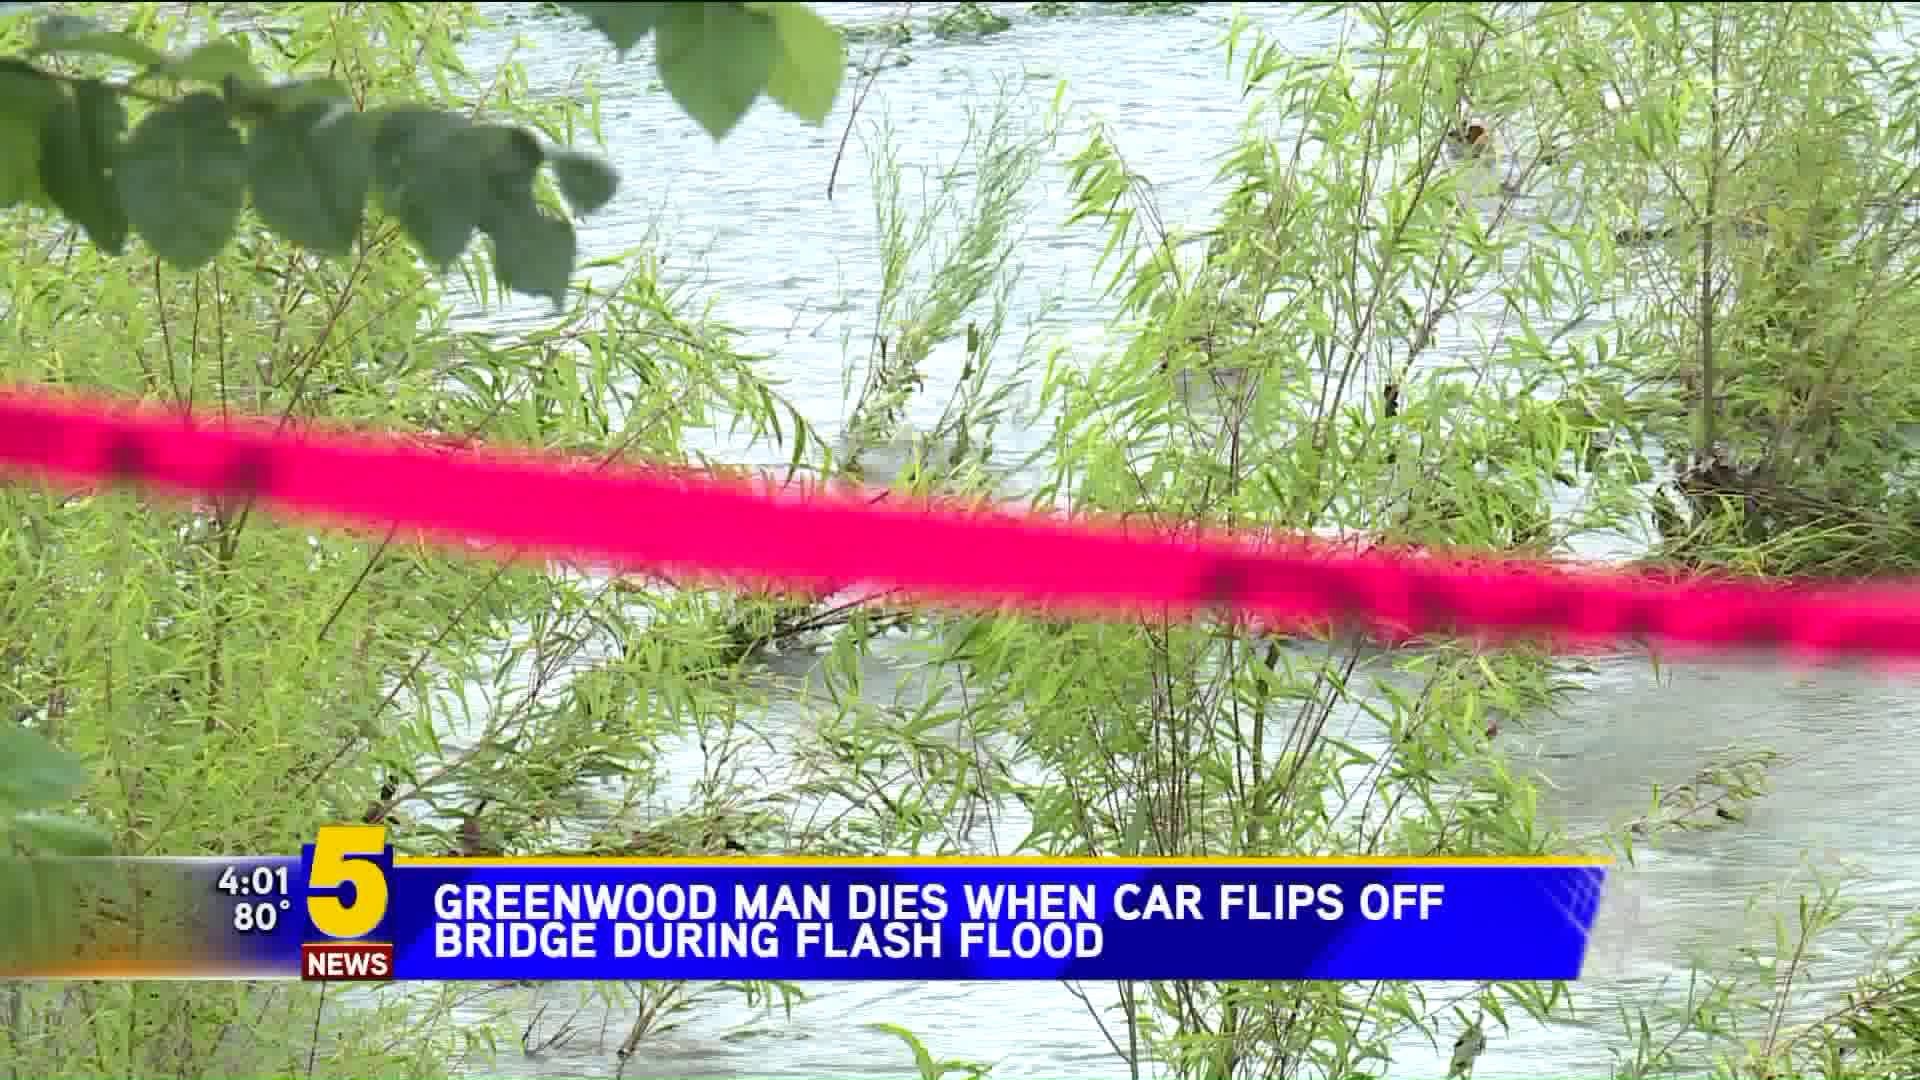 Greenwood Man Dies When Car Flips Off Bridge During Flash Flood